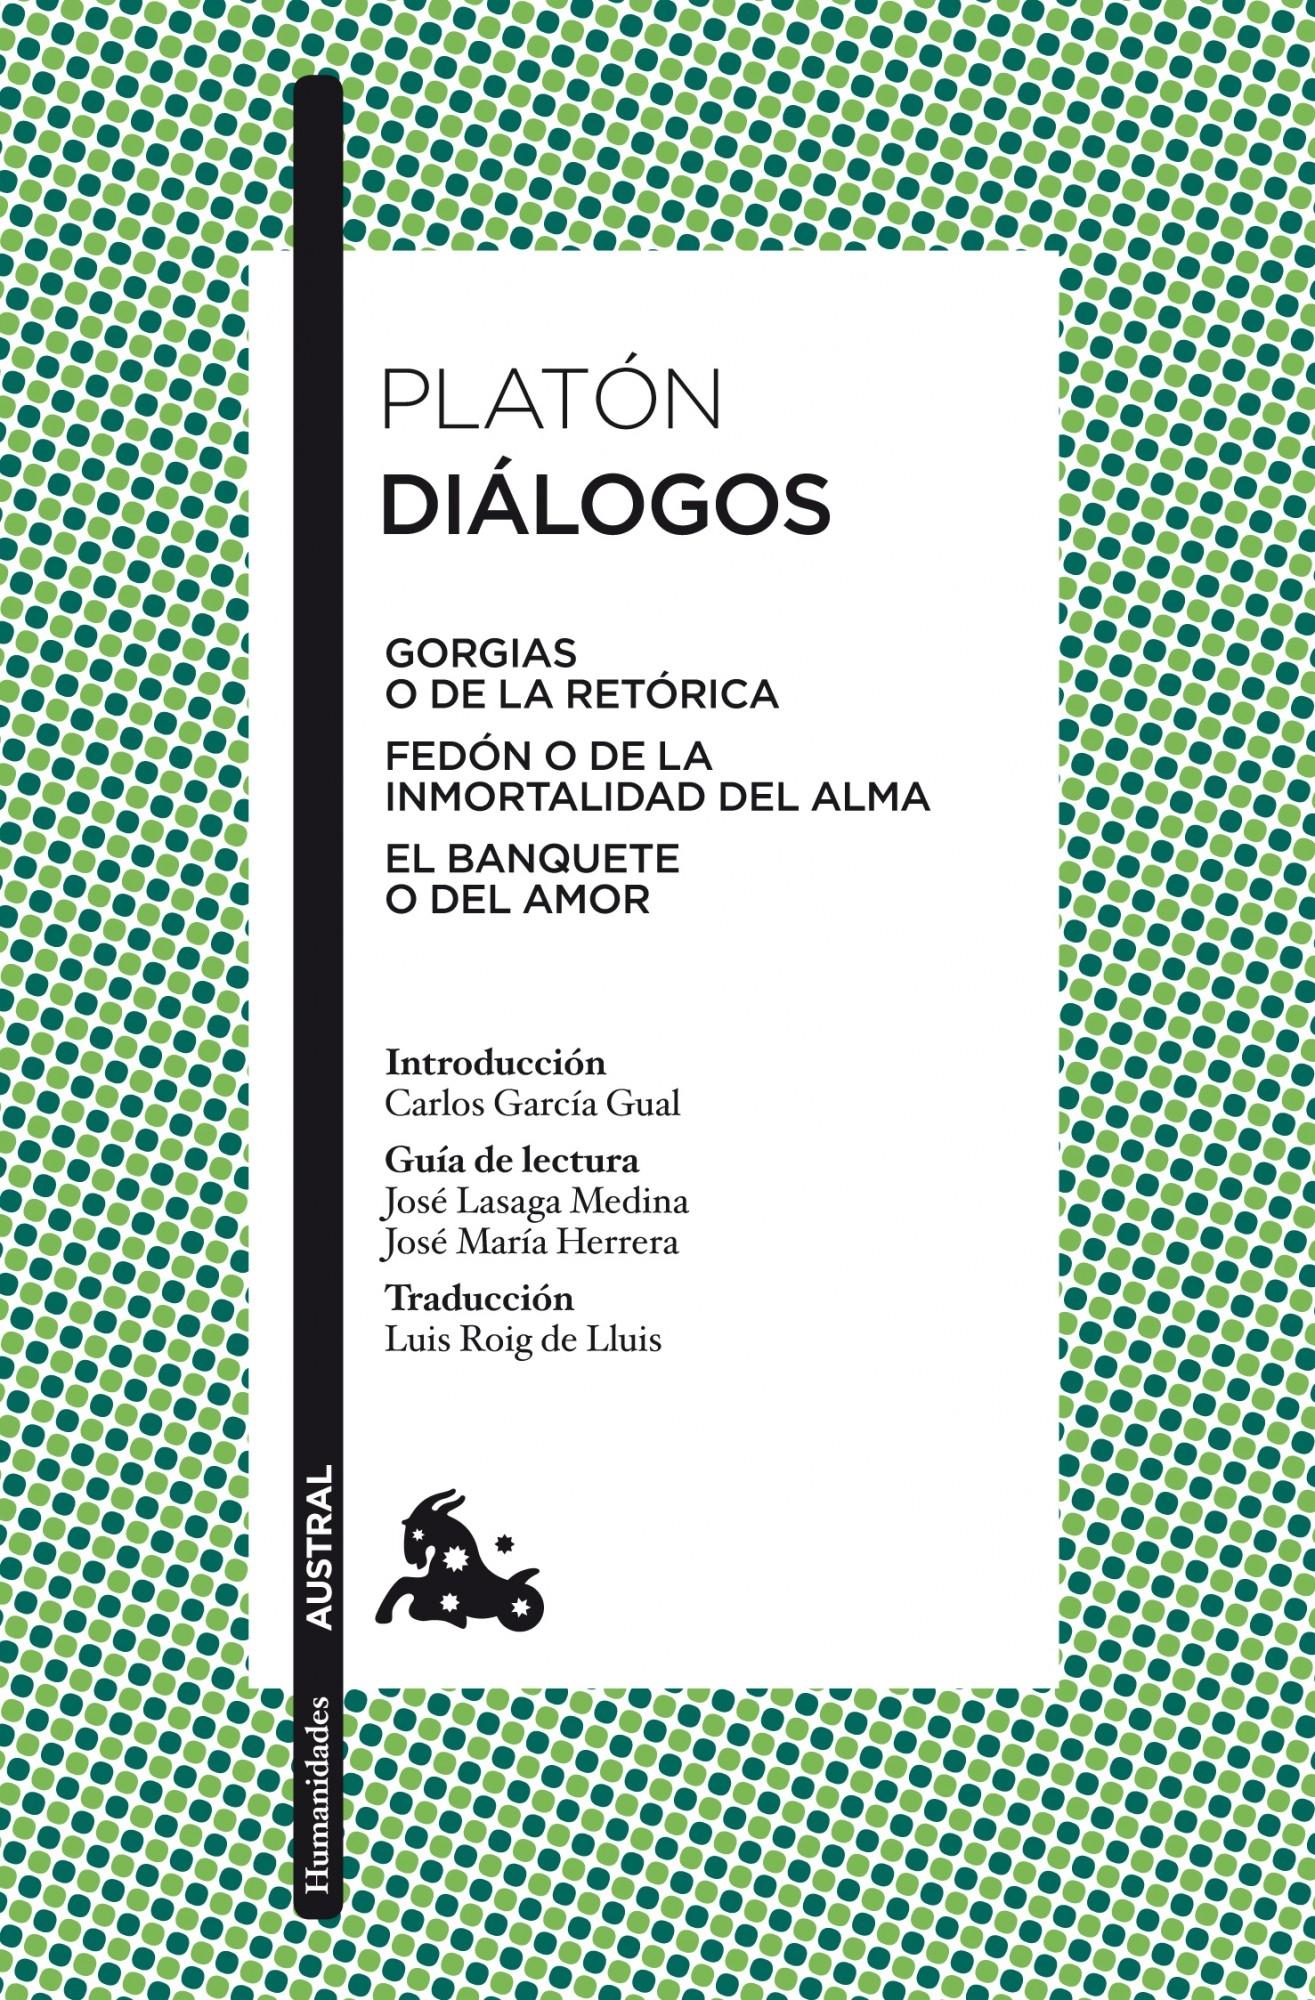 Diálogos "Gorgias, Fedón, El Banquete"